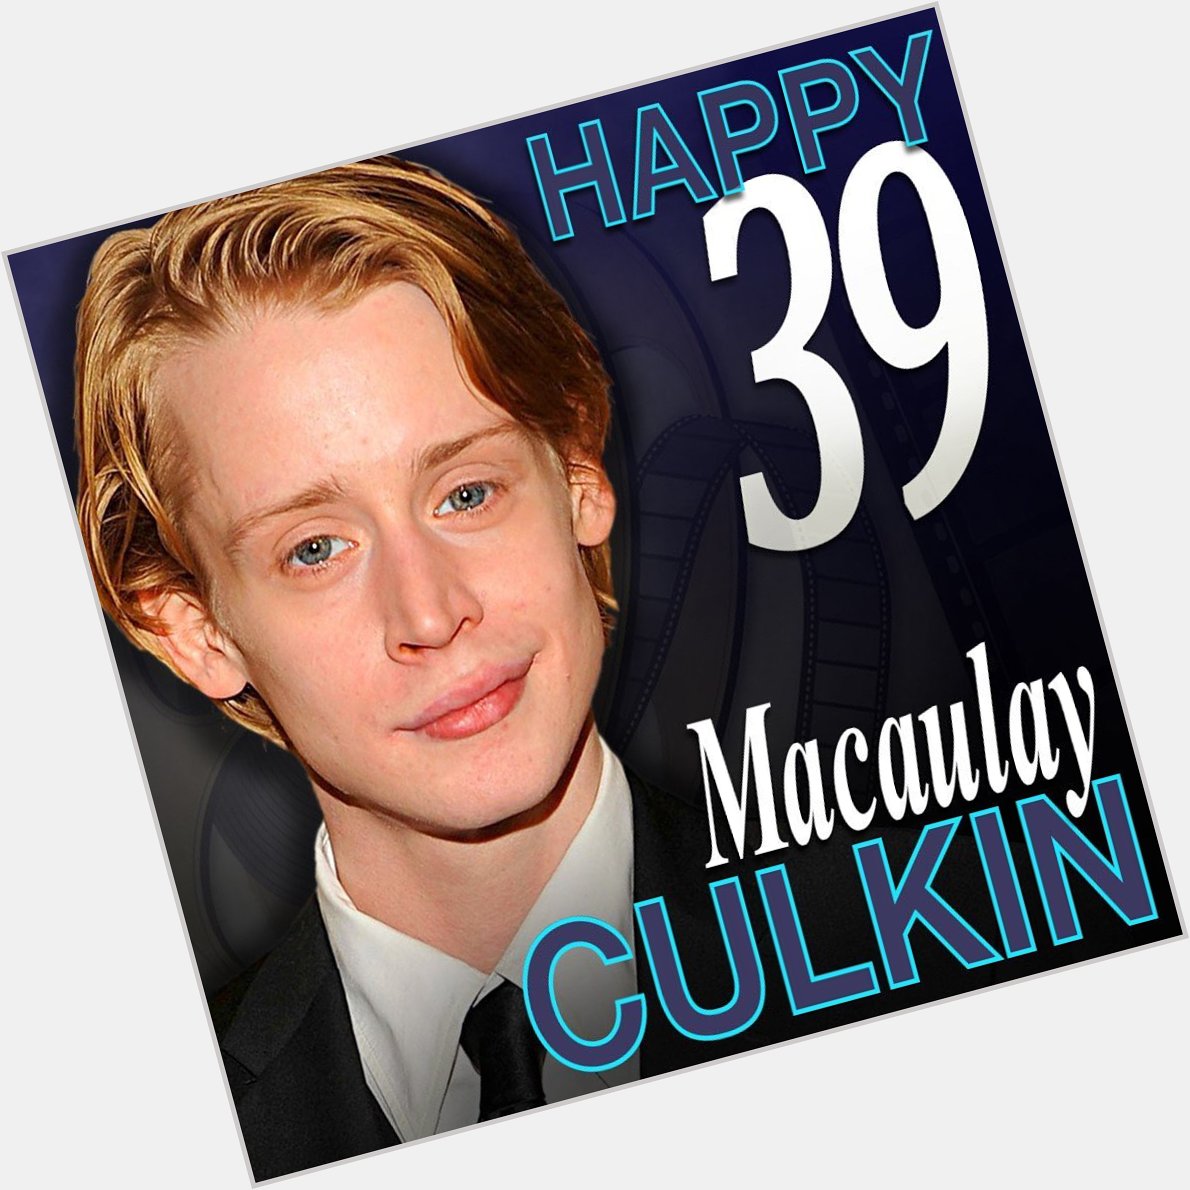 Home Alone s Macaulay Culkin is 39 today! Happy Birthday 